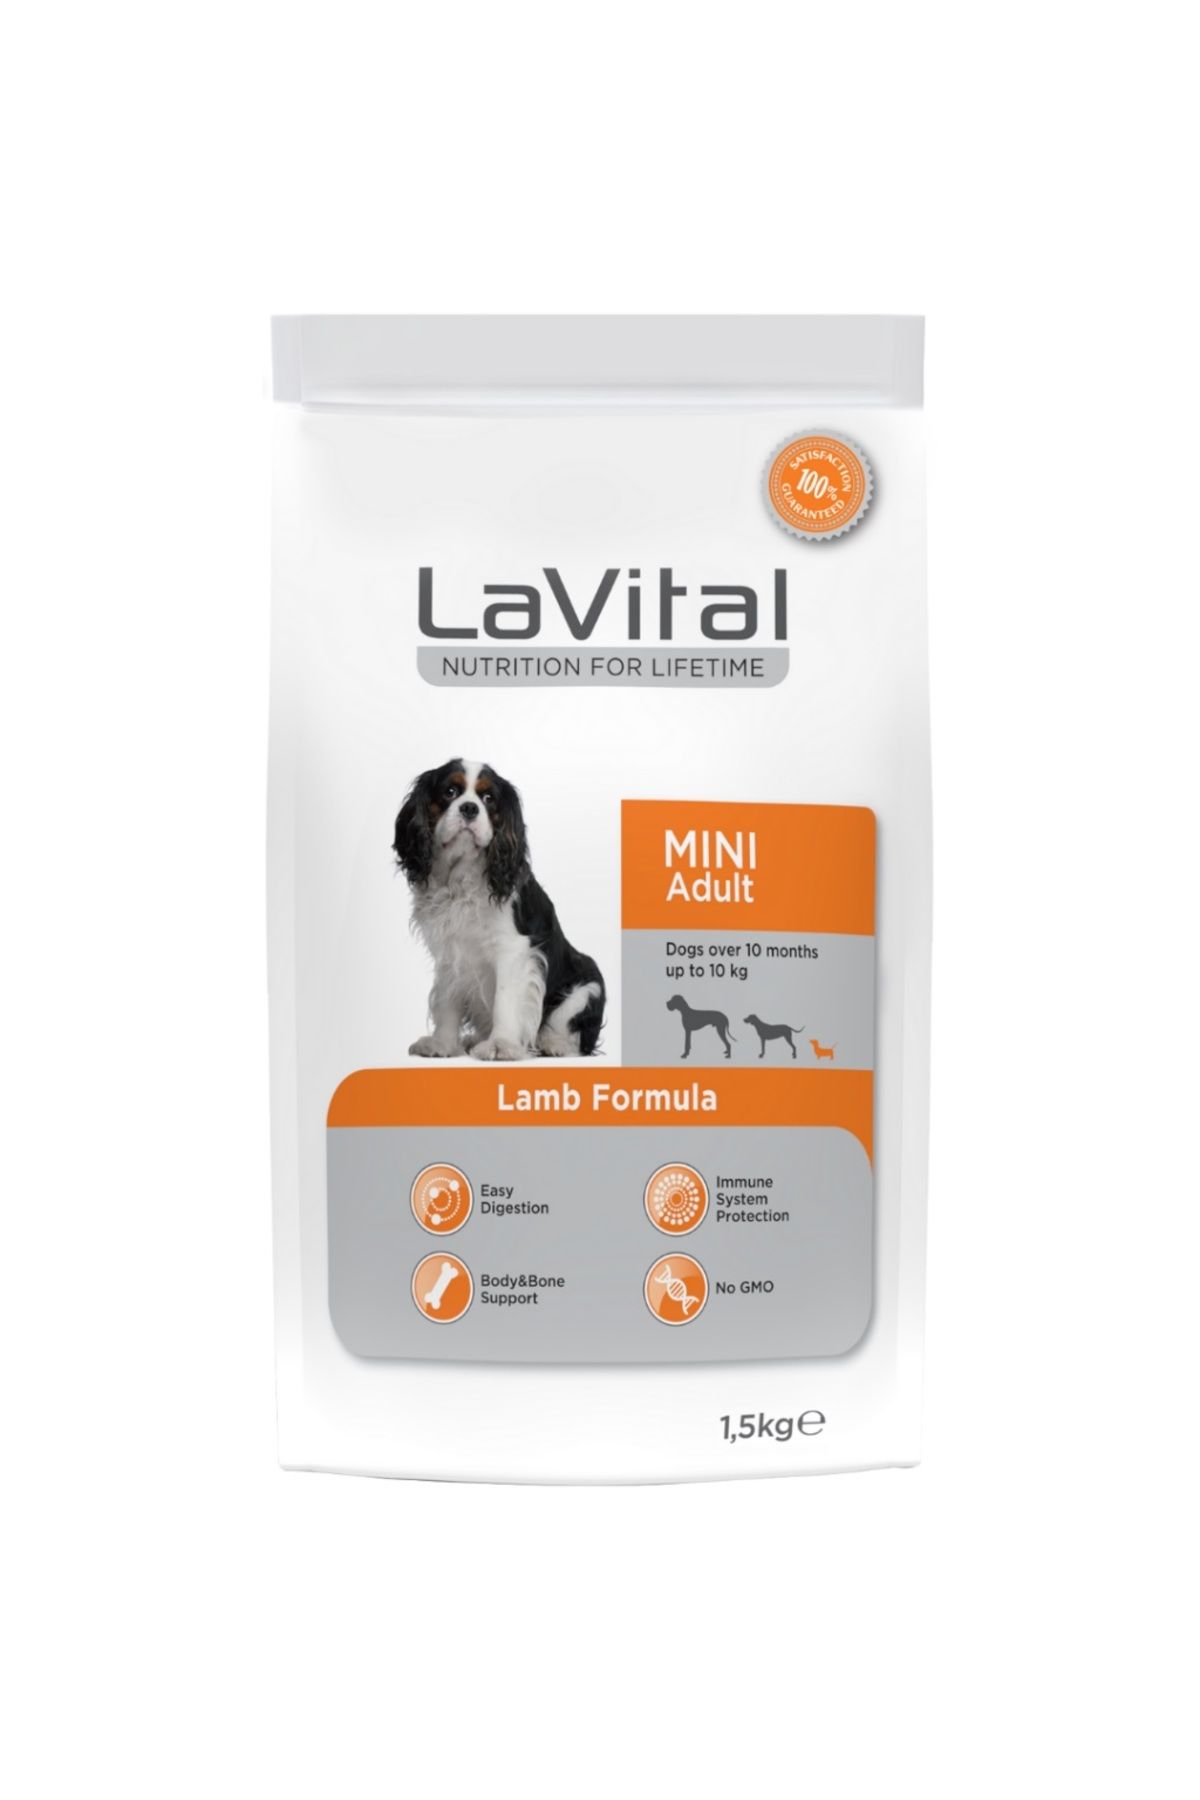 La Vital lavital mini adult kuzulu 1,5kg yetişkin ufak ırk köpek maması lamb formula